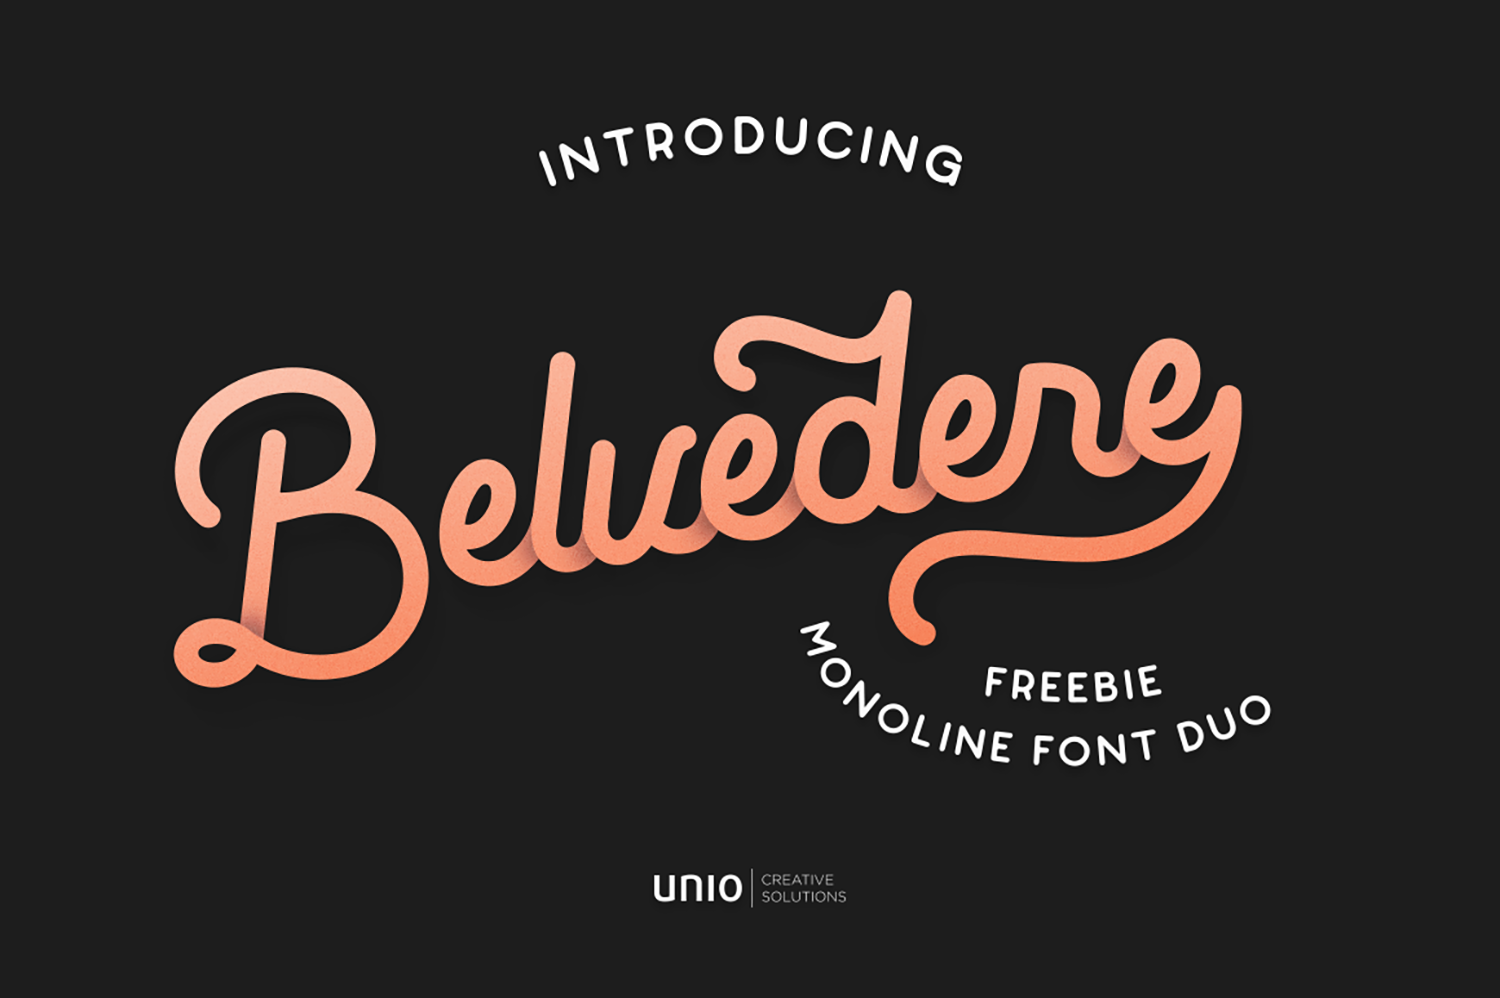 Belvedere Free Font